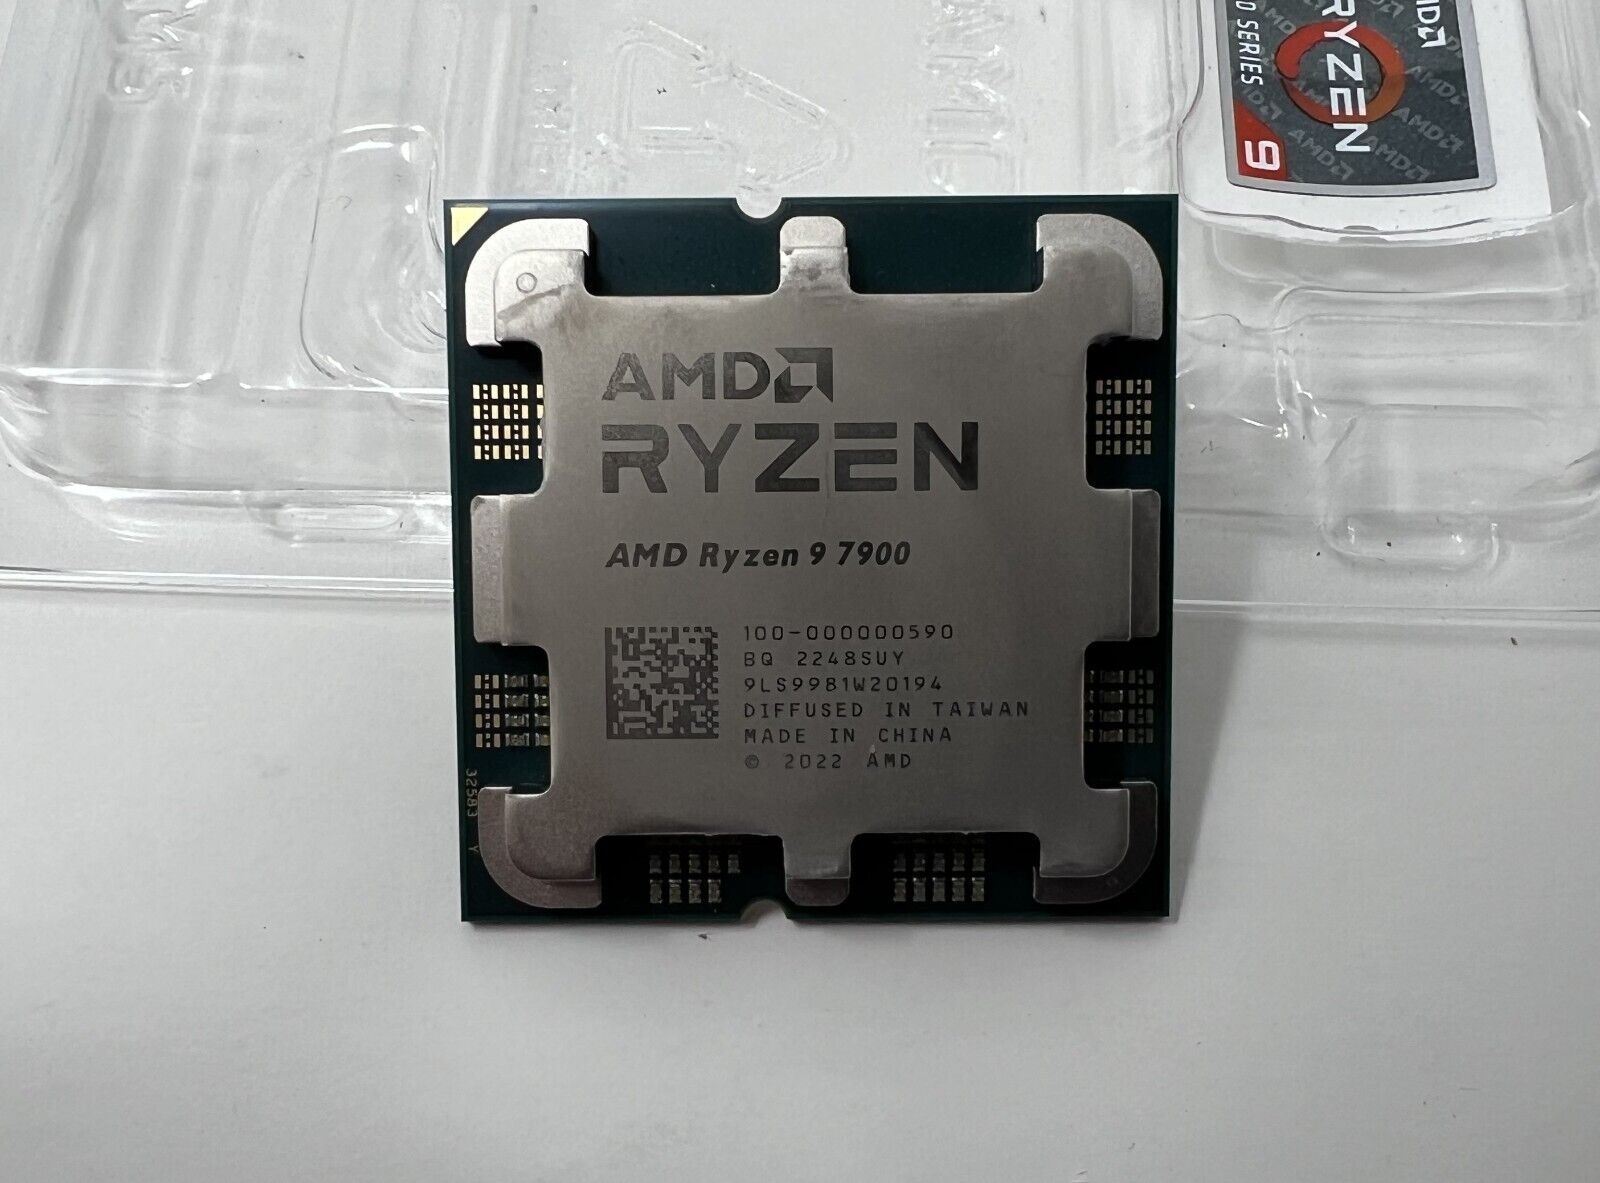 AMD Ryzen 9 7900 3.7GHz (Turbo 5.4GHz) 12 Cores LGA 1718 Socket AM5 Processor